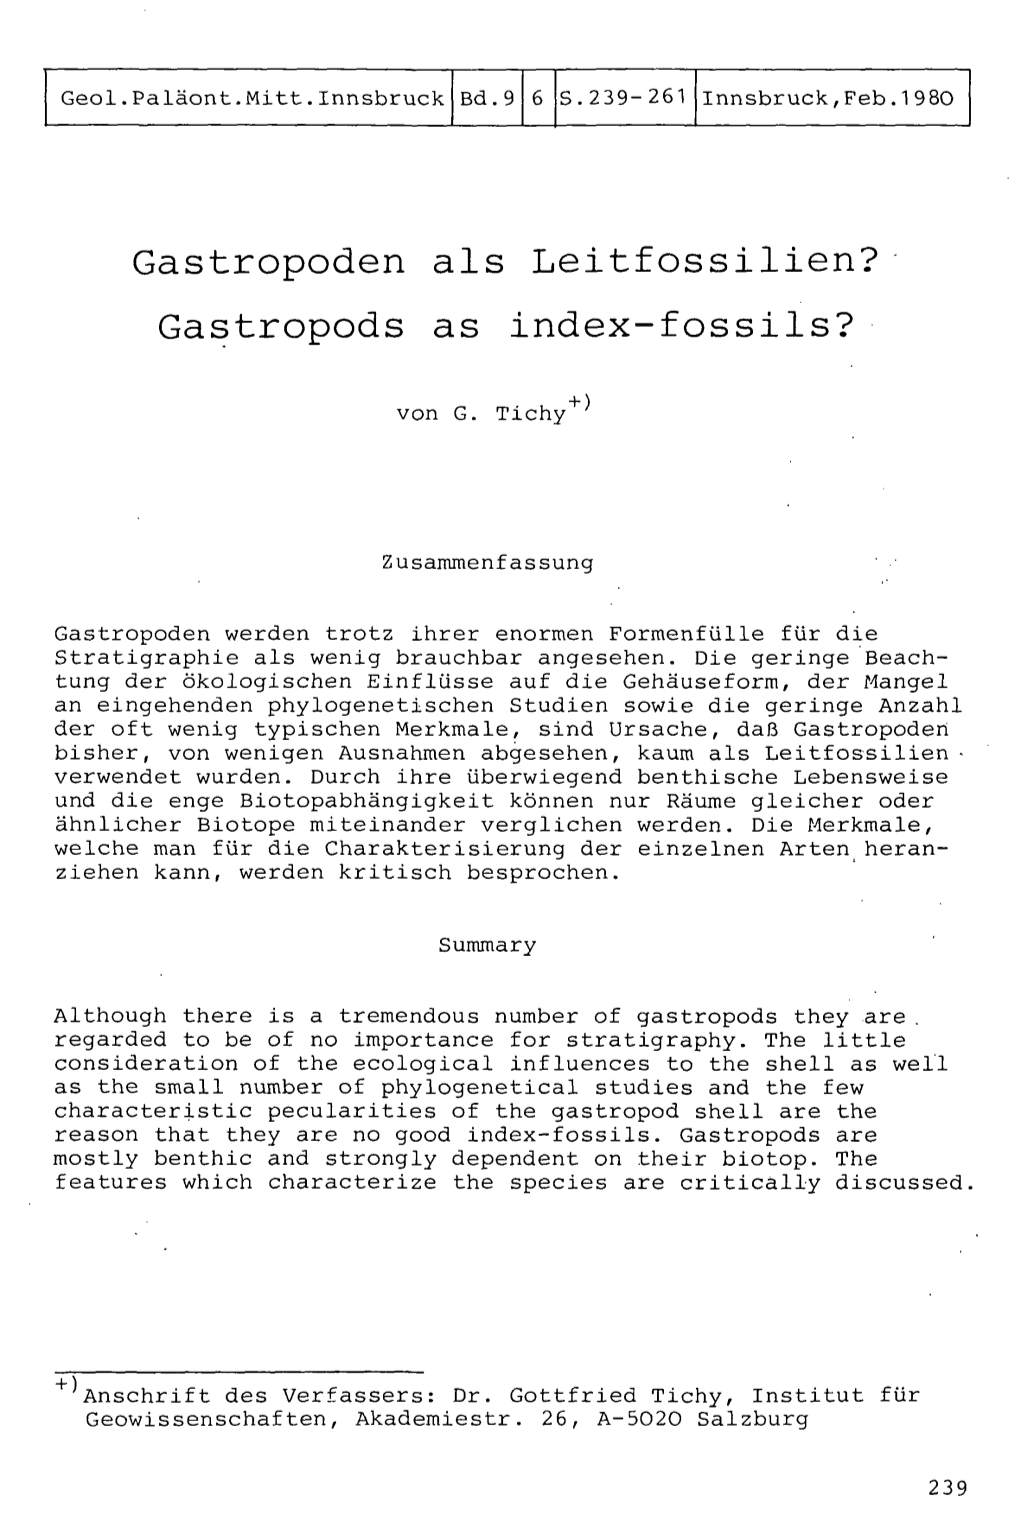 Gastropoden Als Leitfossilien? Gastropods As Index-Fossils?